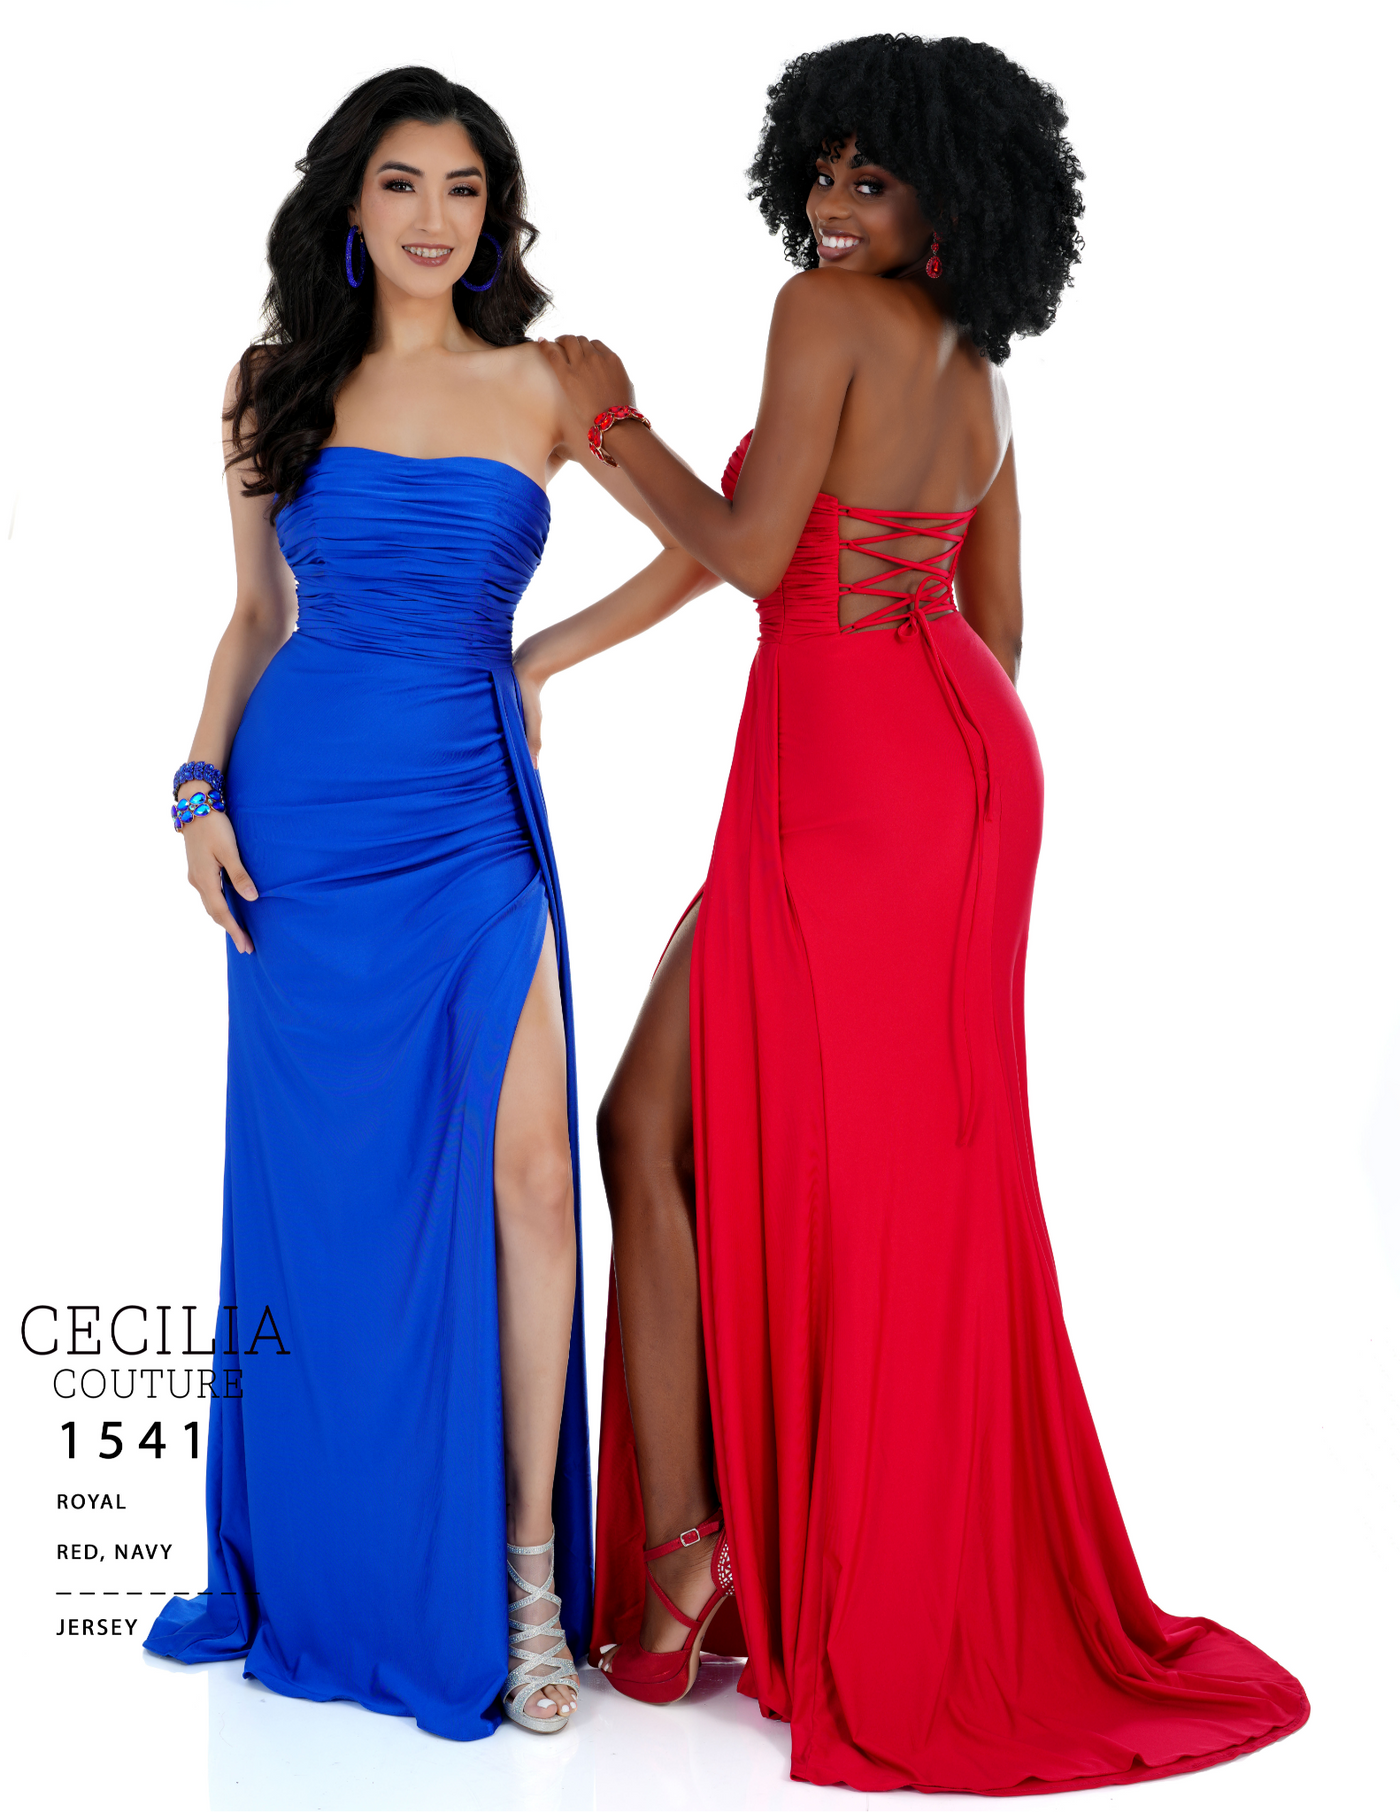 Cecilia Couture 1541 Red Prom Dress